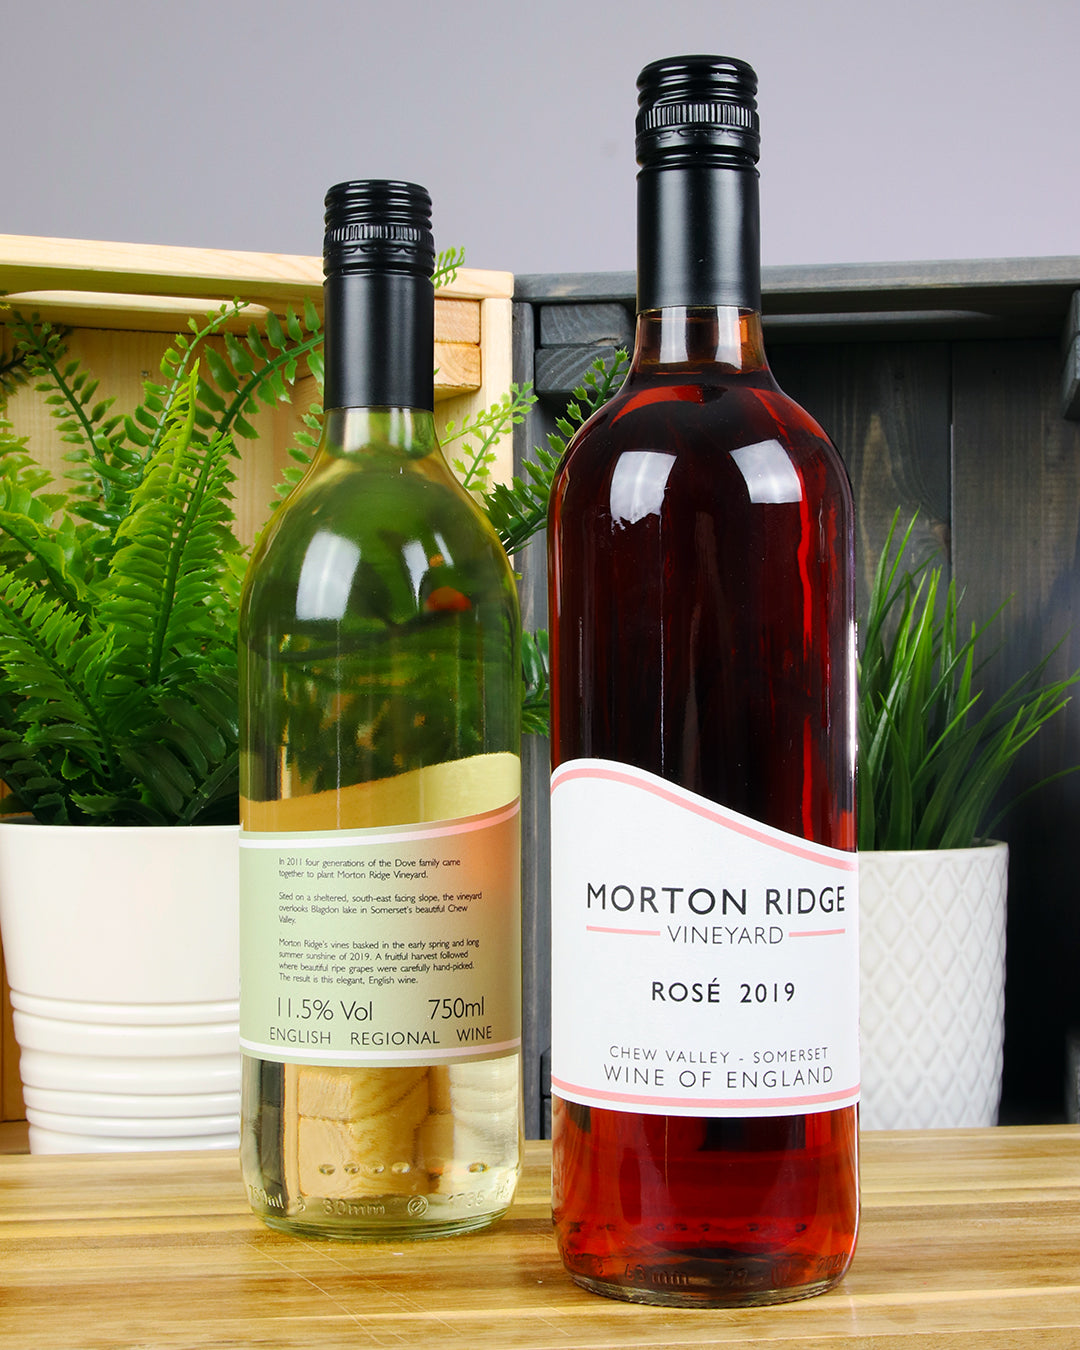 Morton Ridge wine bottles with biodegradable paper labels applied